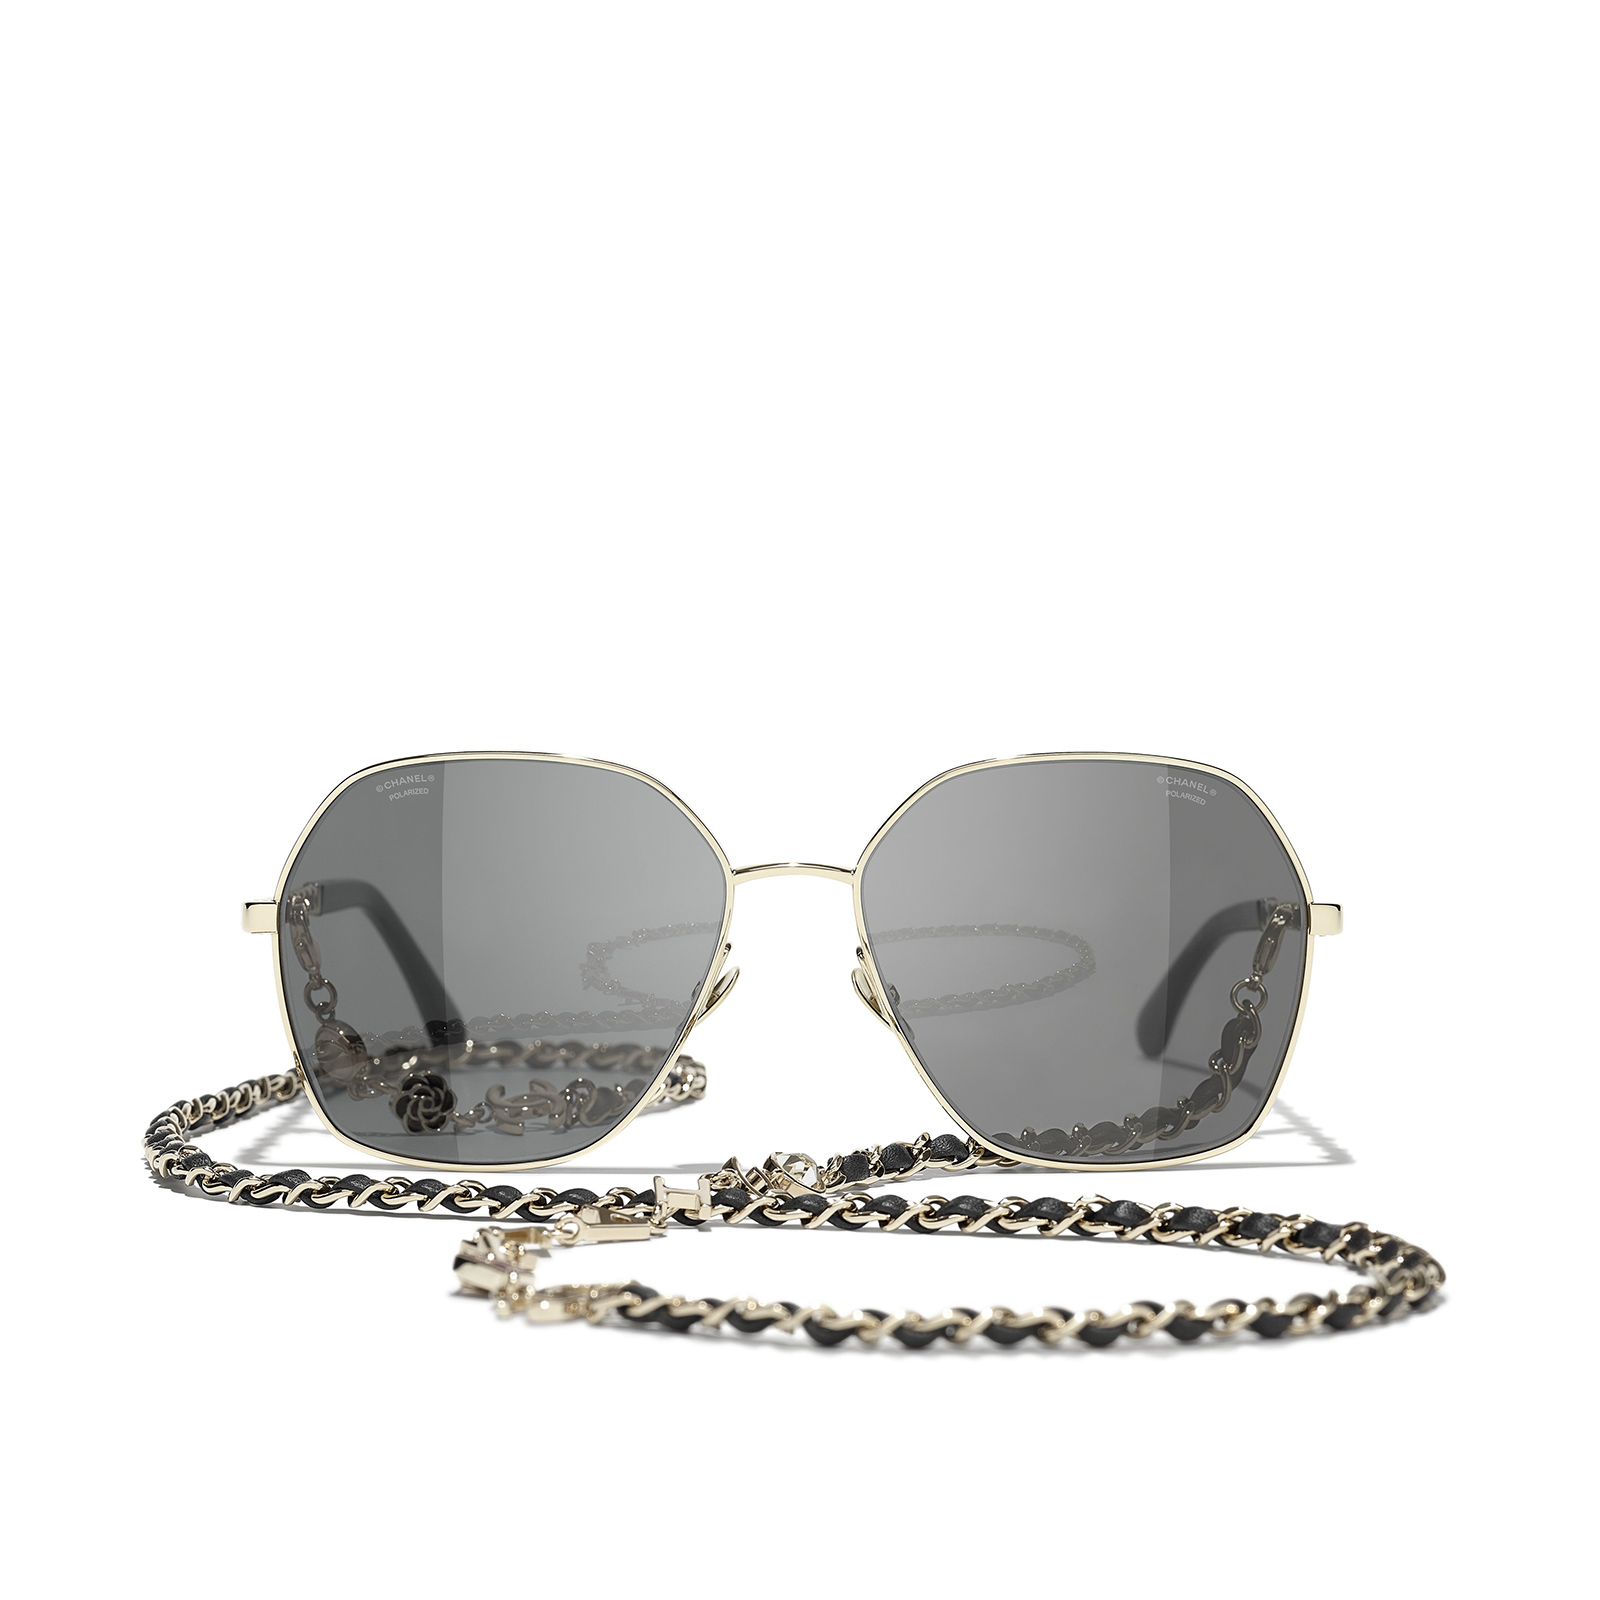 CHANEL square Sunglasses C395T8 Gold & Black - front view